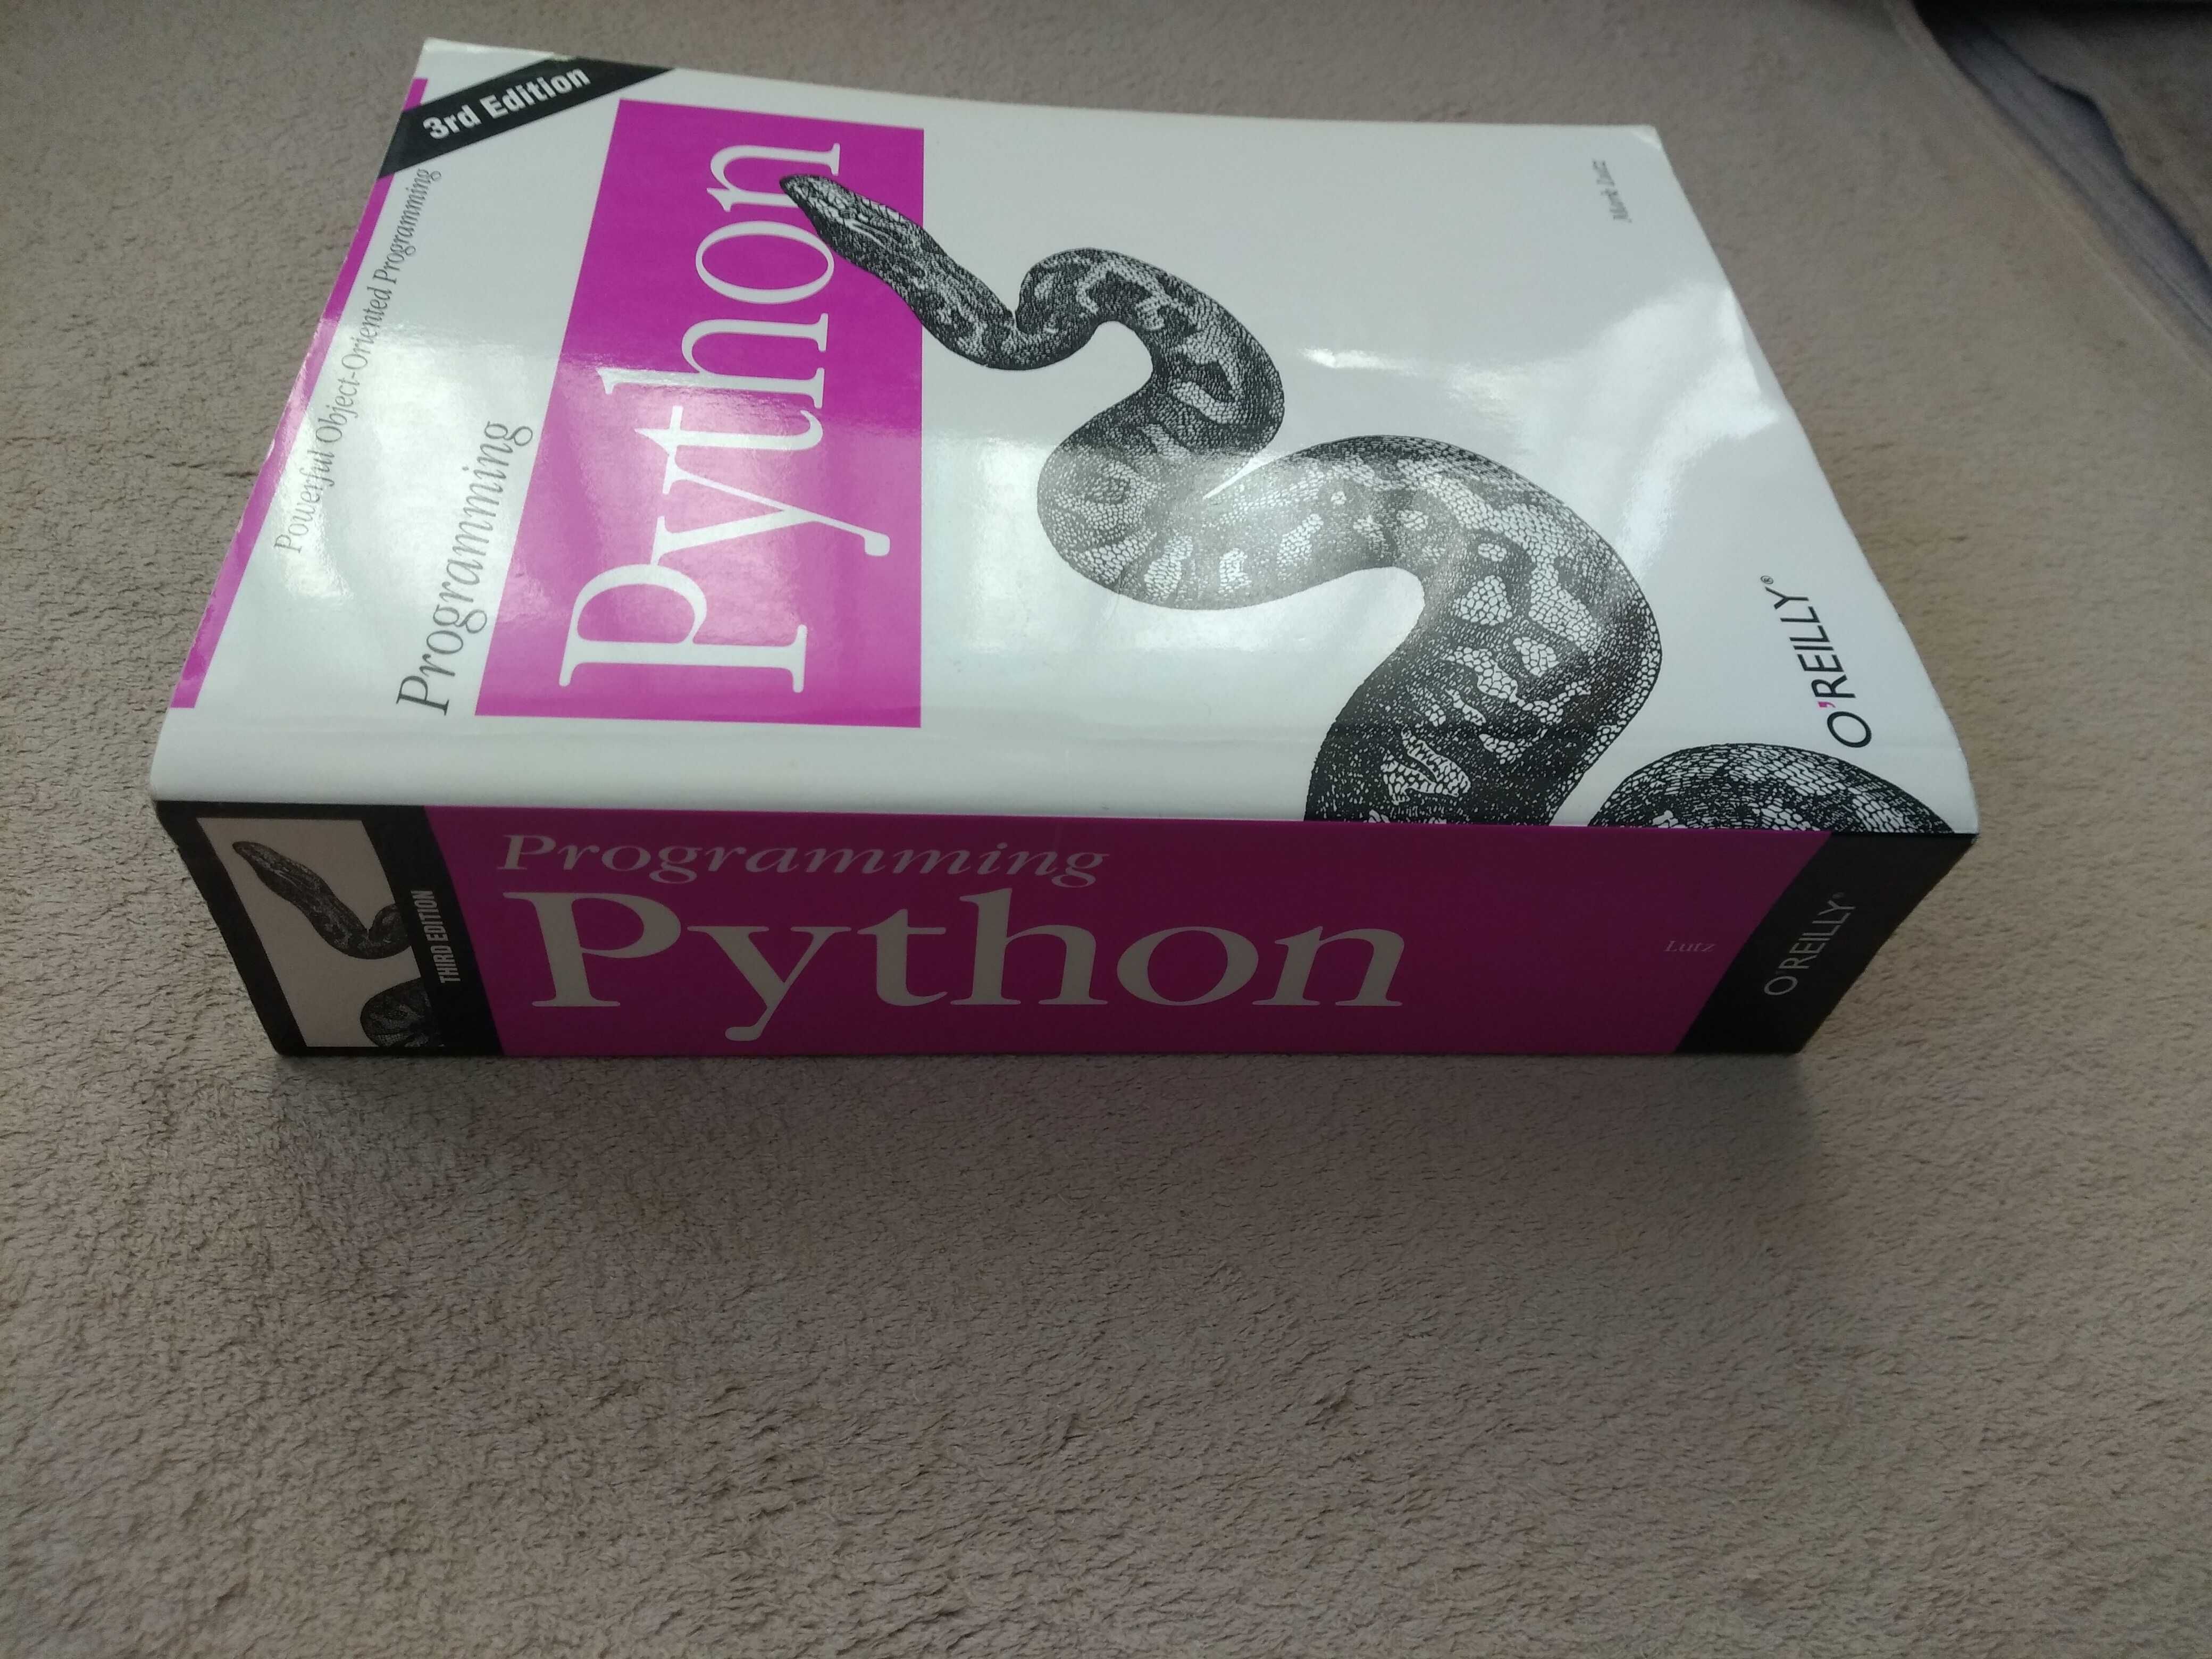 Programming Python Mark Lutz 3rd Edition 2006